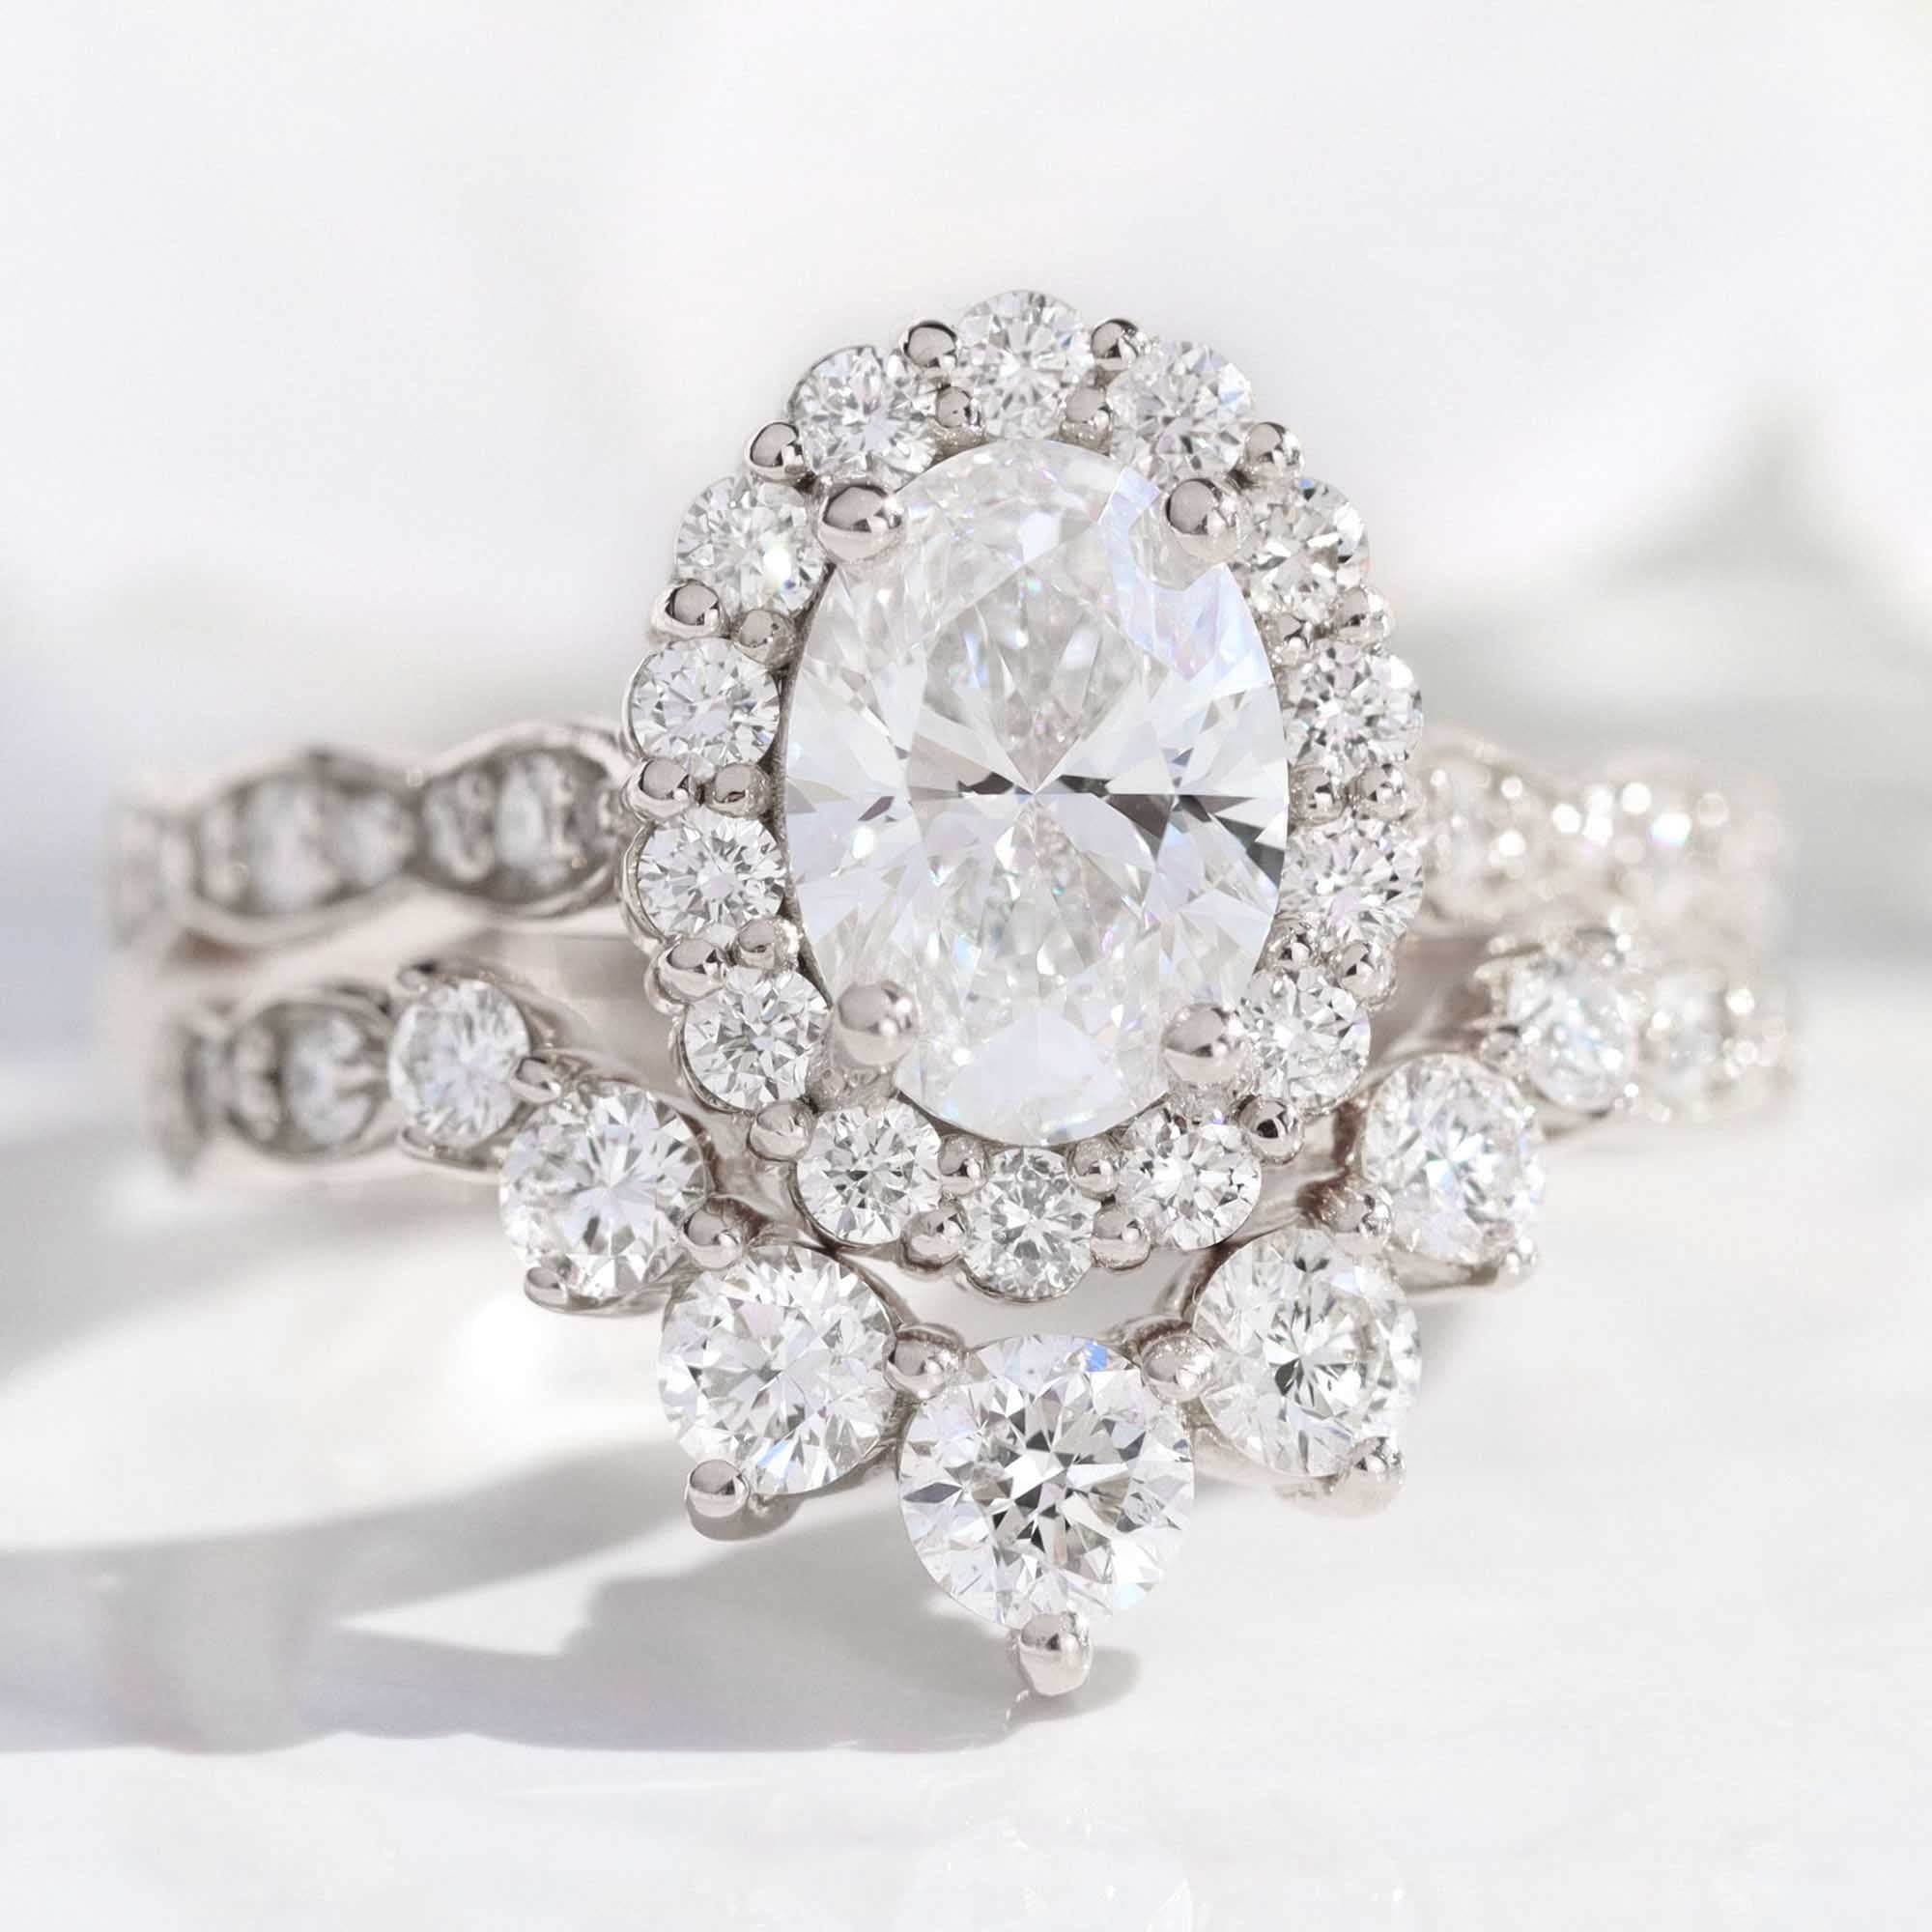 lab diamond ring stack white gold halo diamond engagement ring set La More Design Jewelry